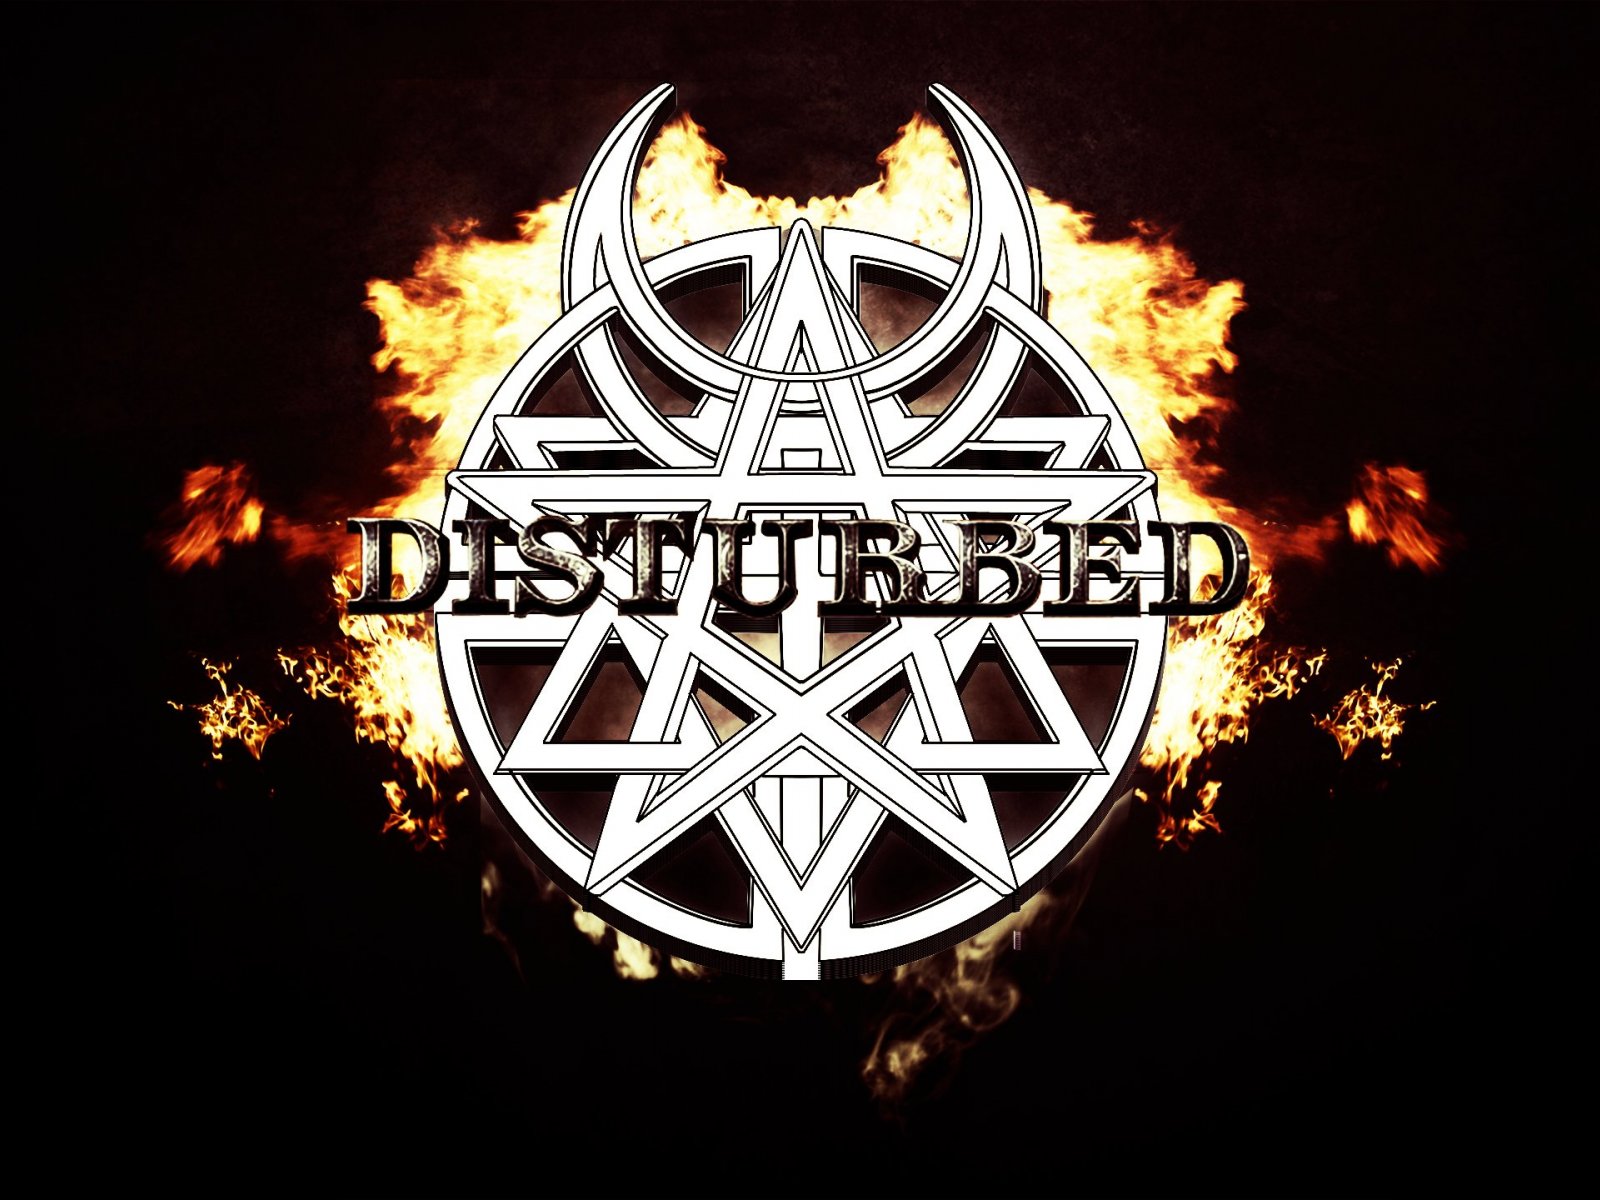 music, disturbed, disturbed (band), heavy metal 2160p